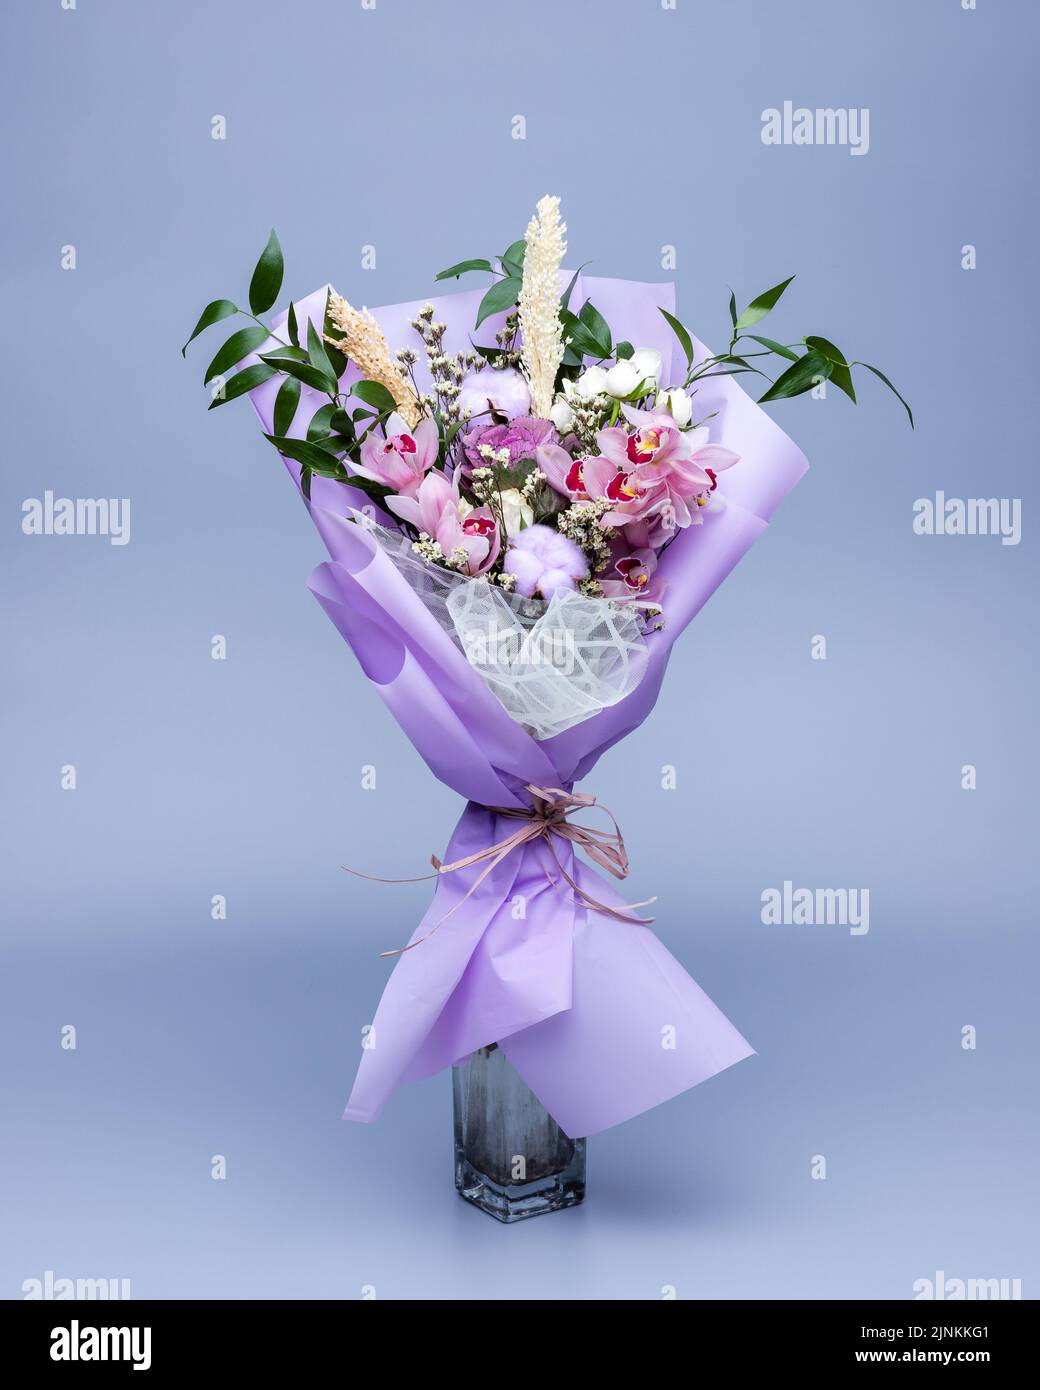 Flores de papel fotografías e imágenes de alta resolución - Alamy